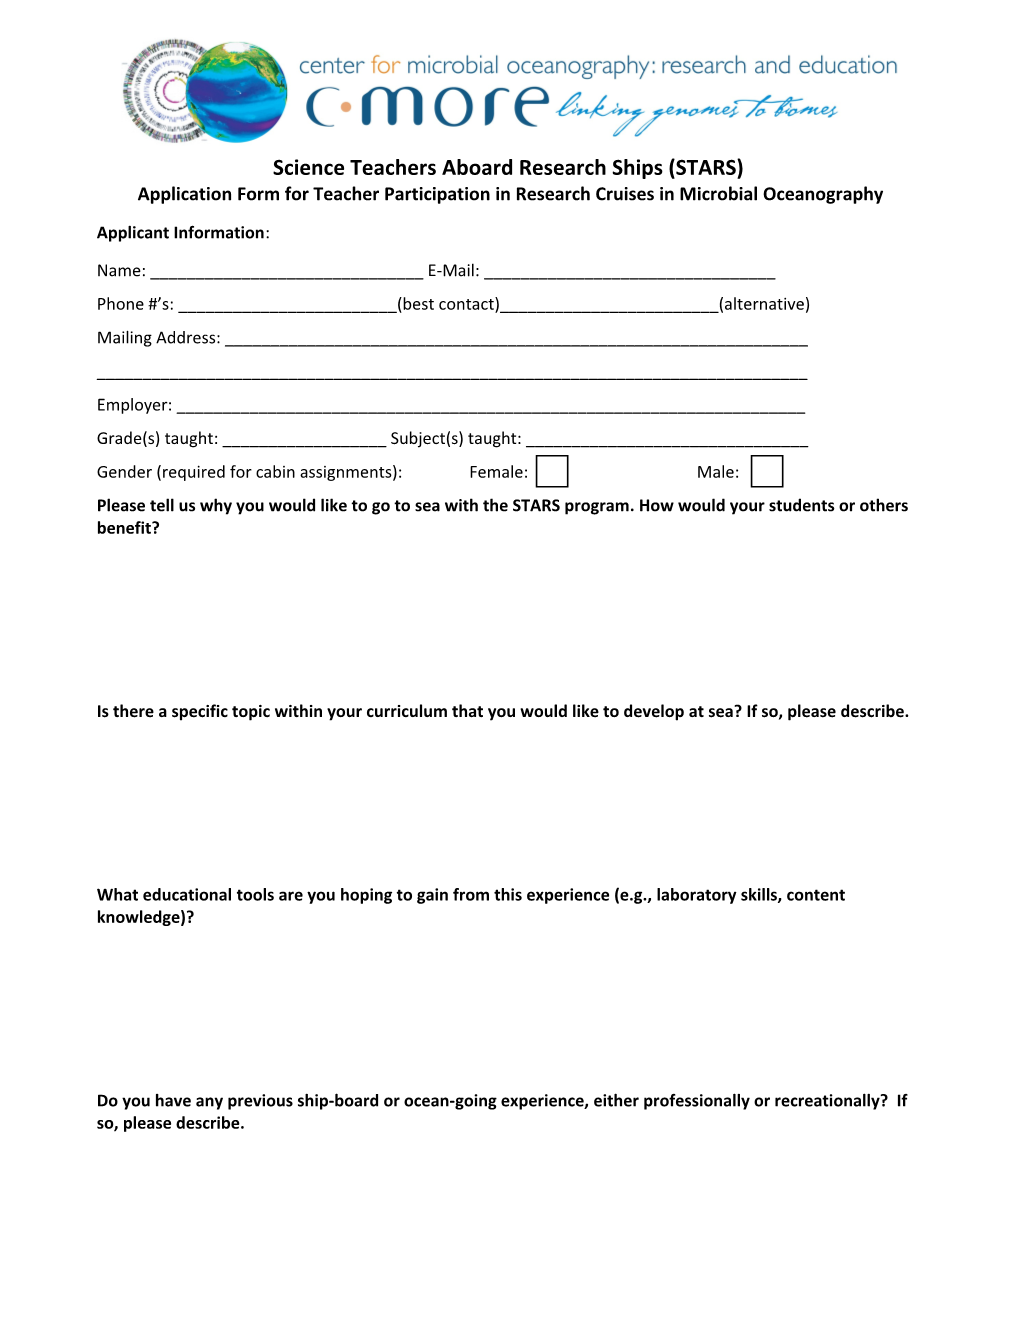 C-MORE Mini-Grant Application Form